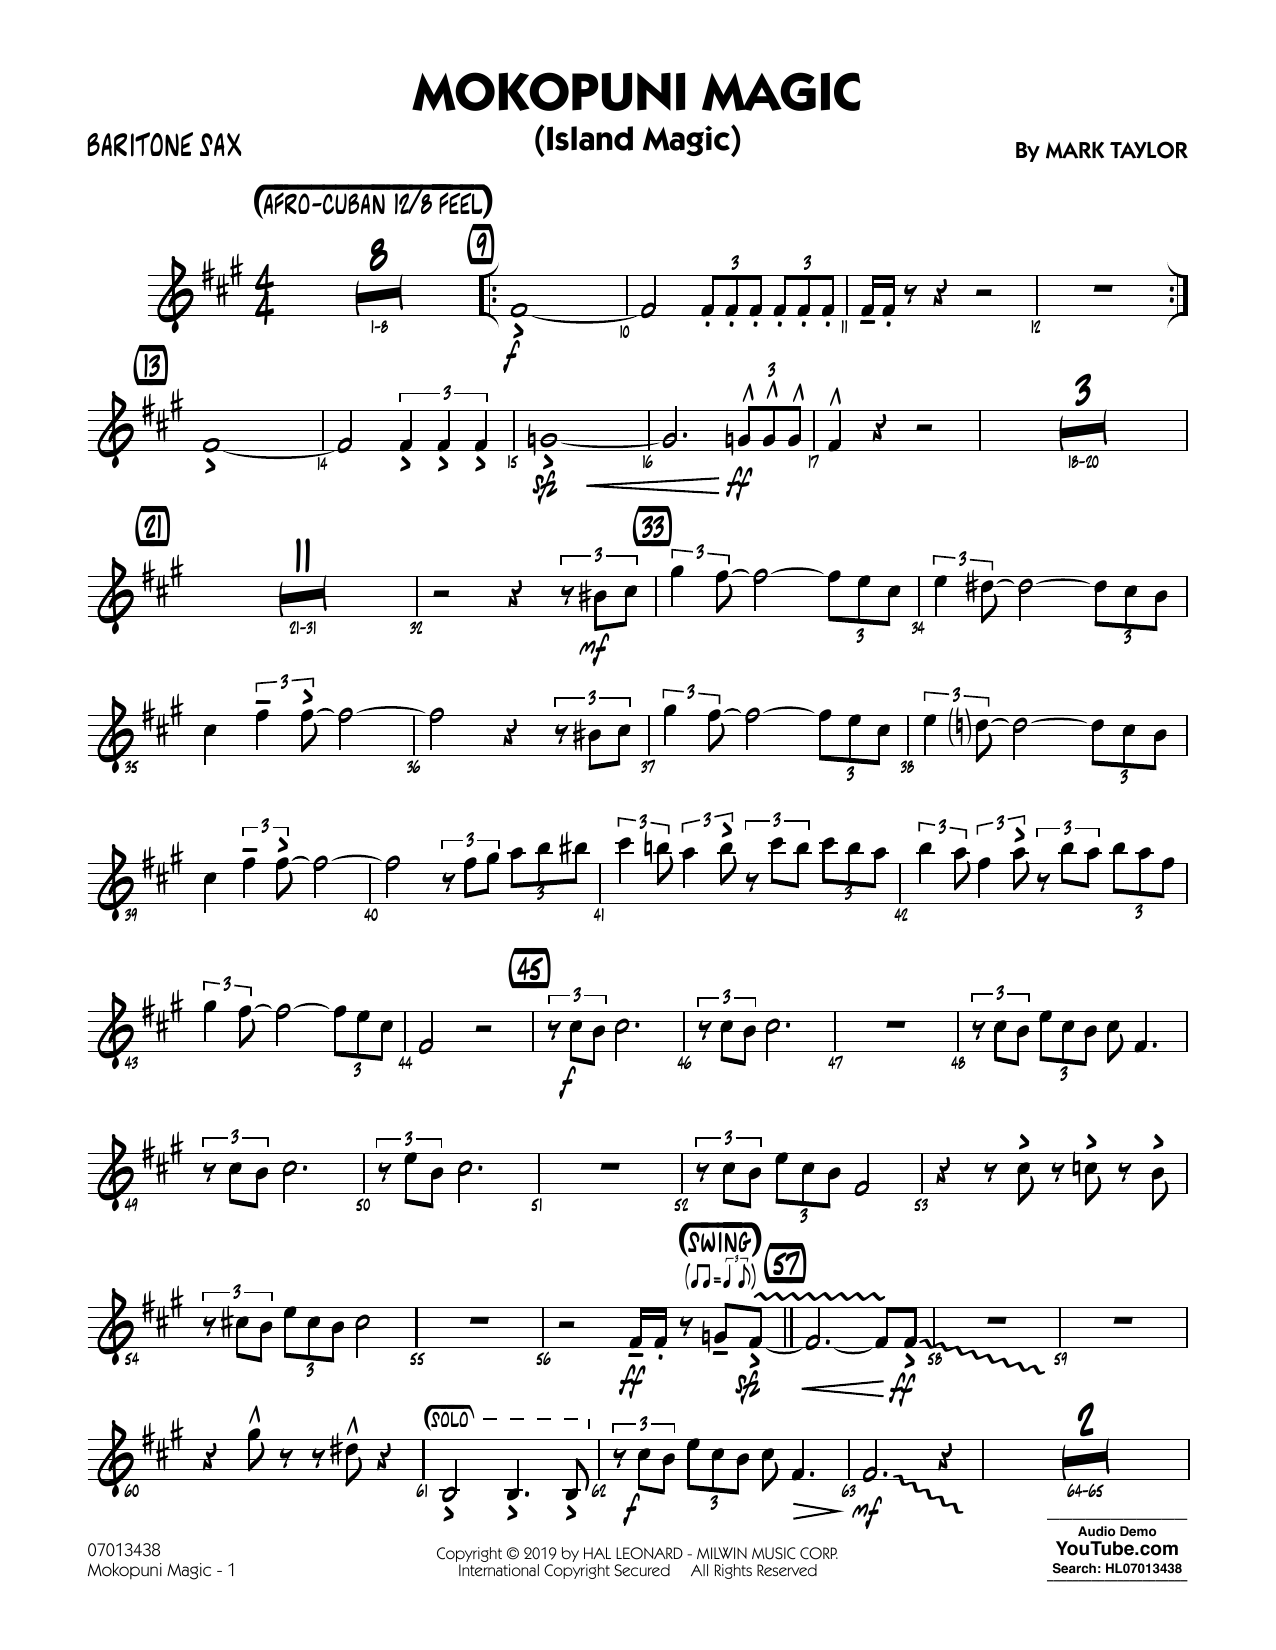 Download Mark Taylor Mokopuni Magic (Island Magic) - Baritone Sax Sheet Music and learn how to play Jazz Ensemble PDF digital score in minutes